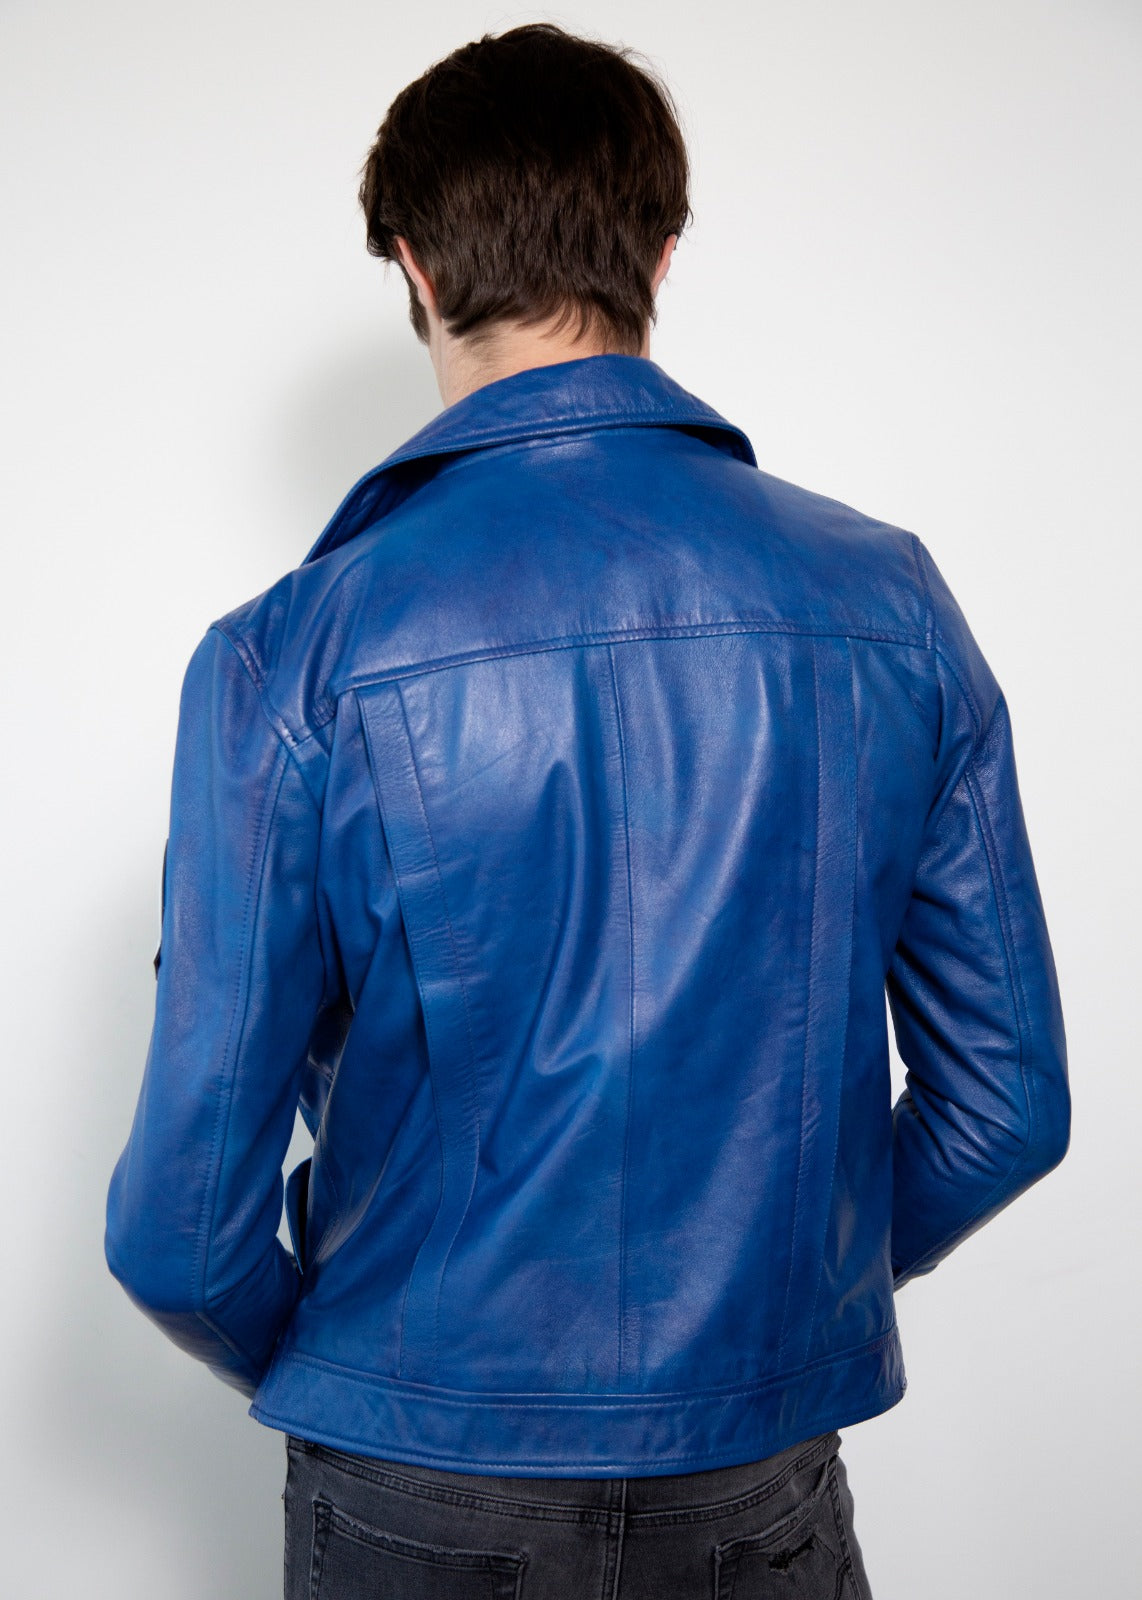 DBZ Future Trunks Leather Jacket Blue Back